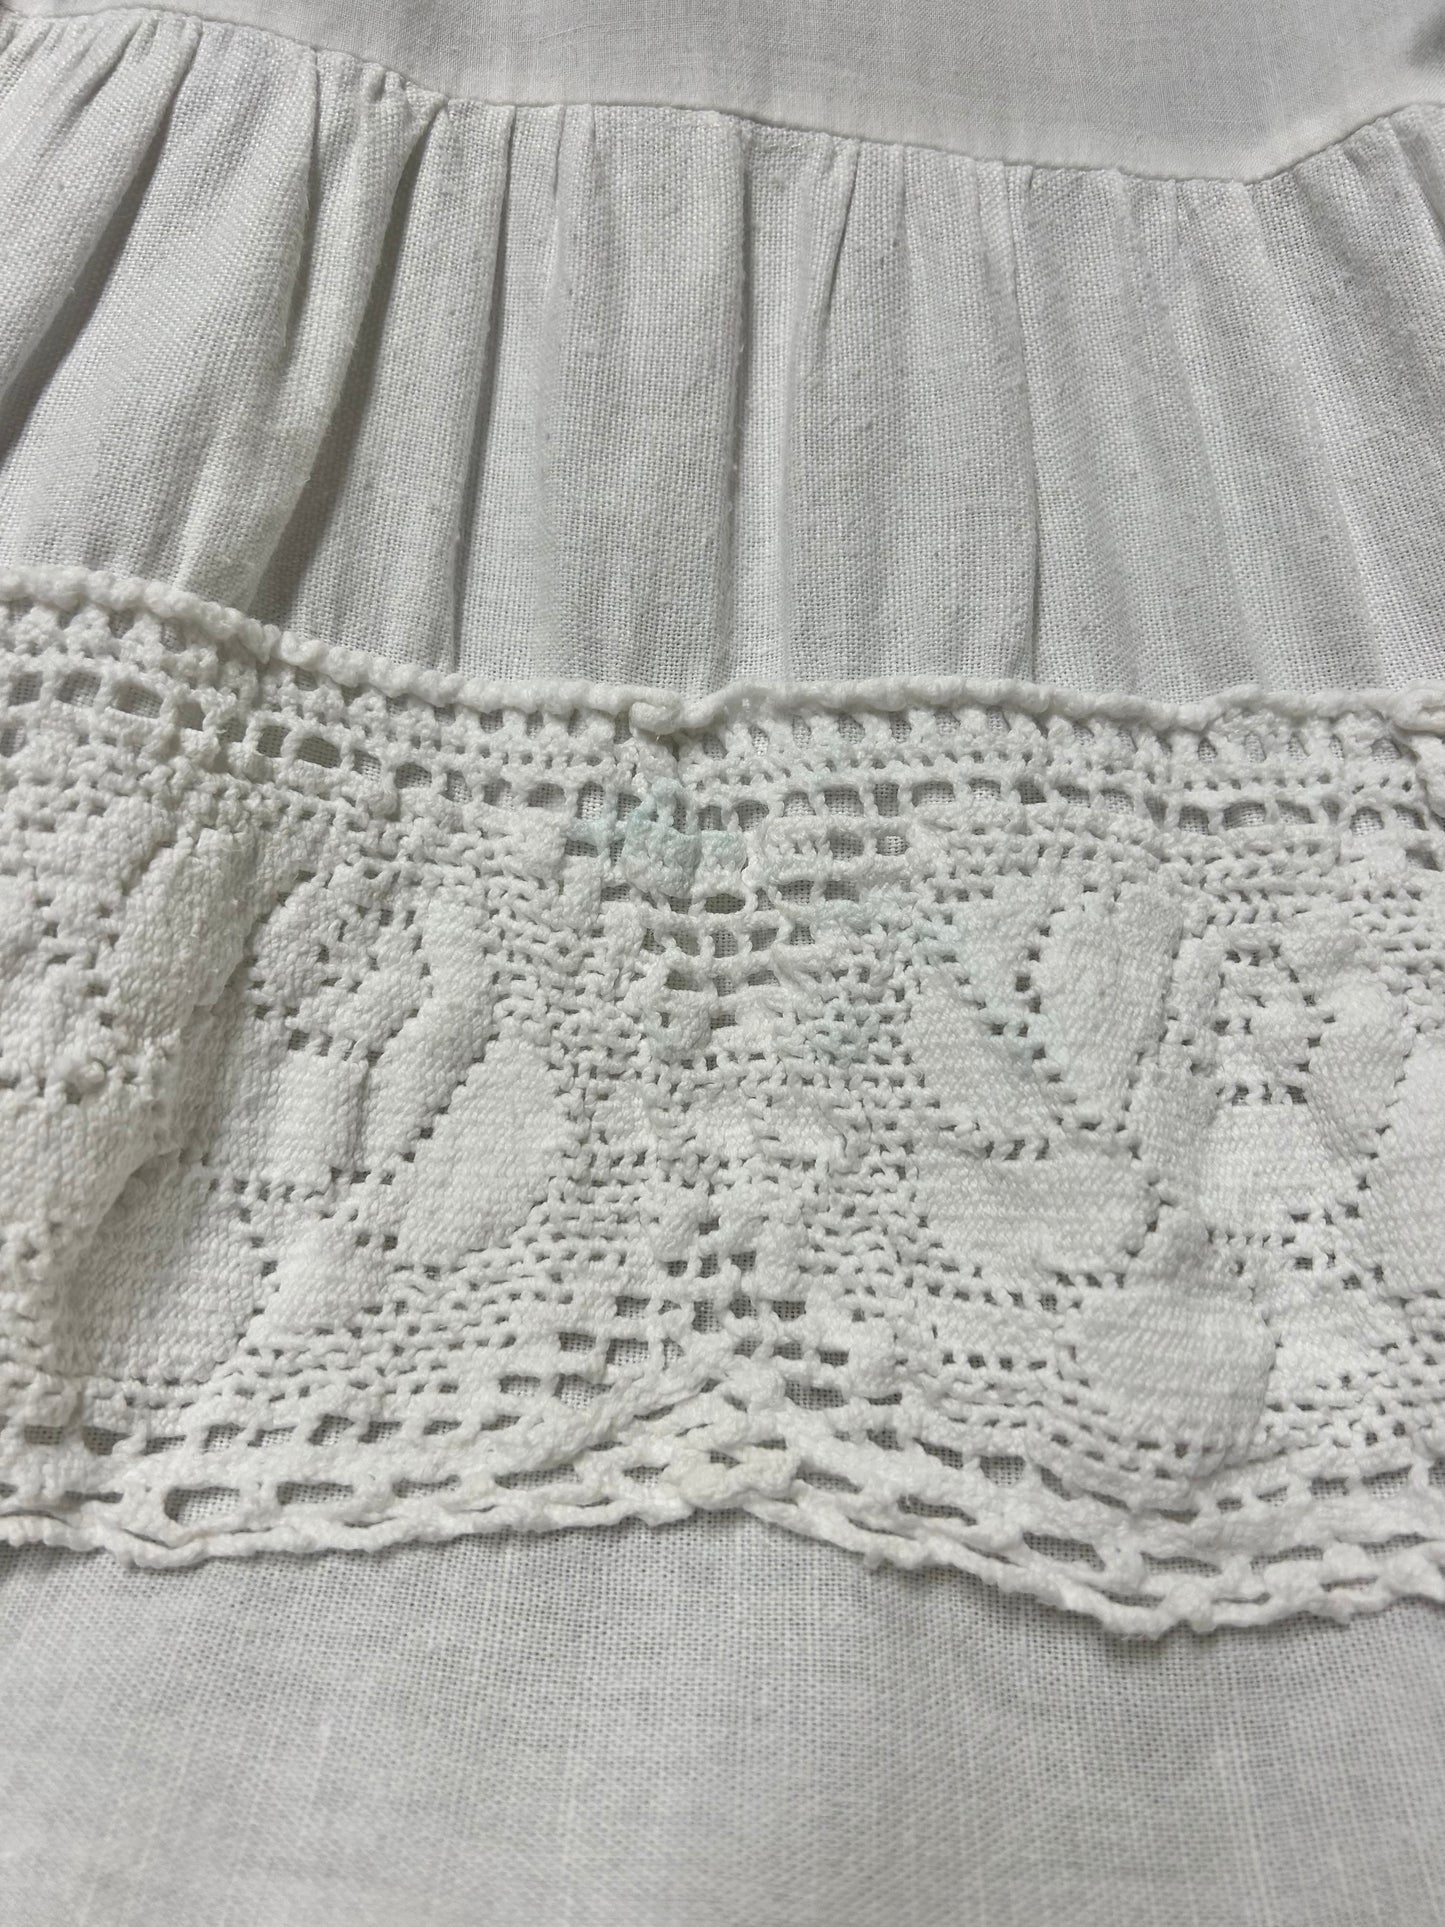 Vintage Petti Skirt [D26898]